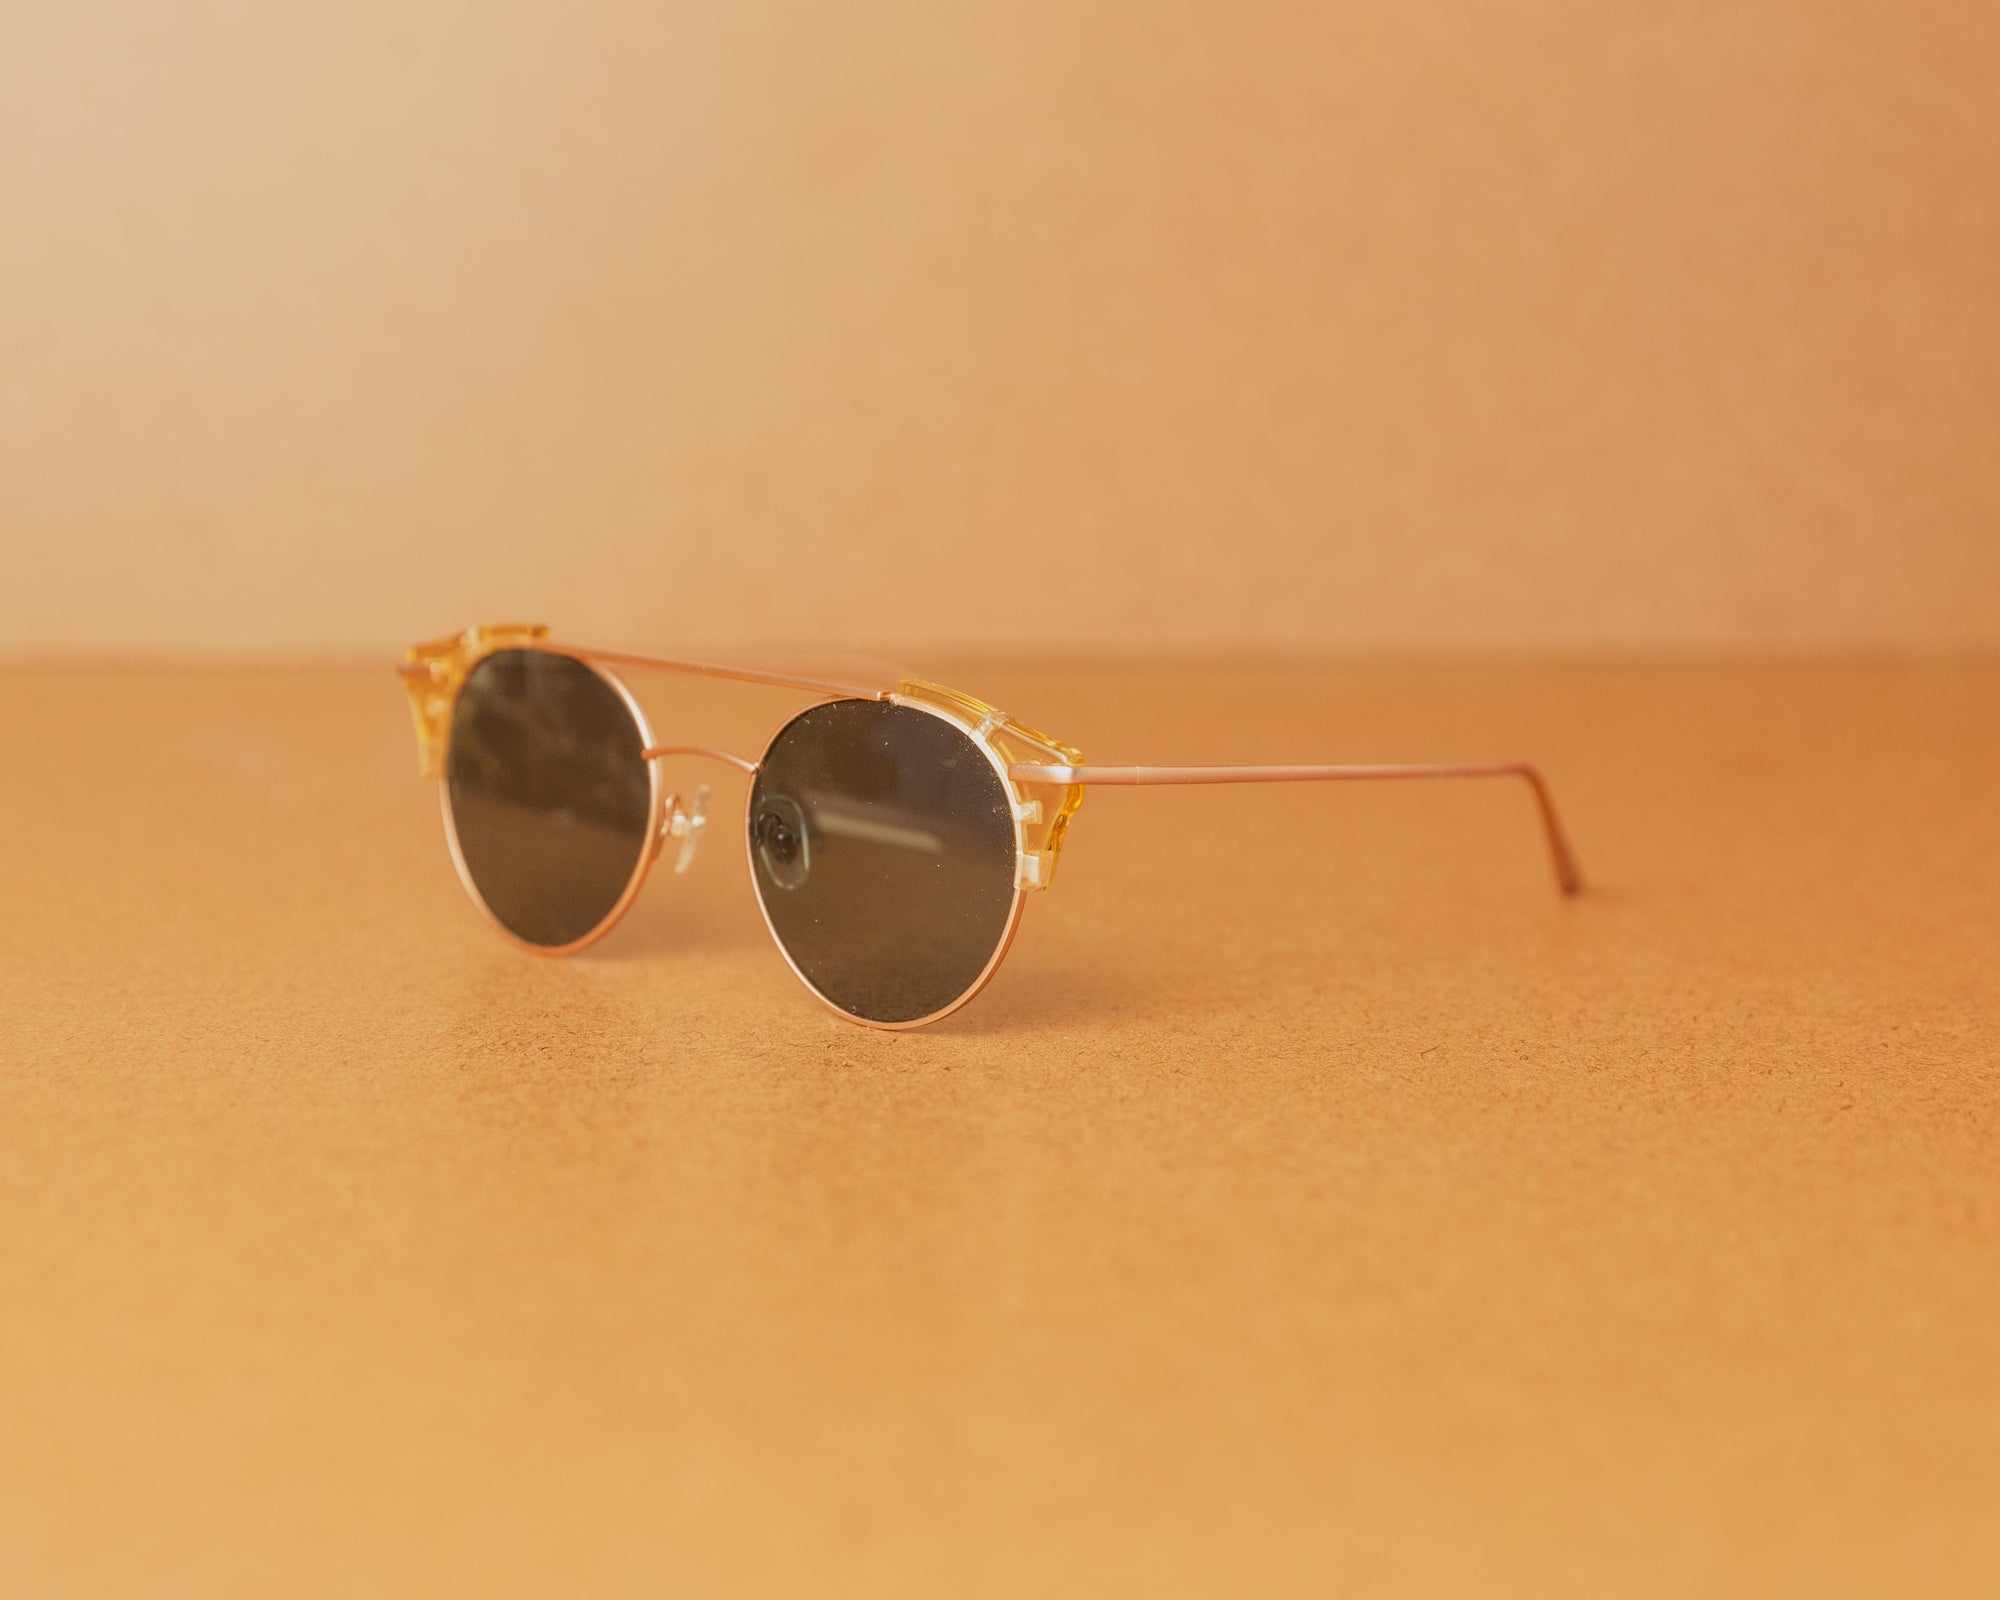 Wonderland Rialto Sunglasses in Clear Beach Glass/Green